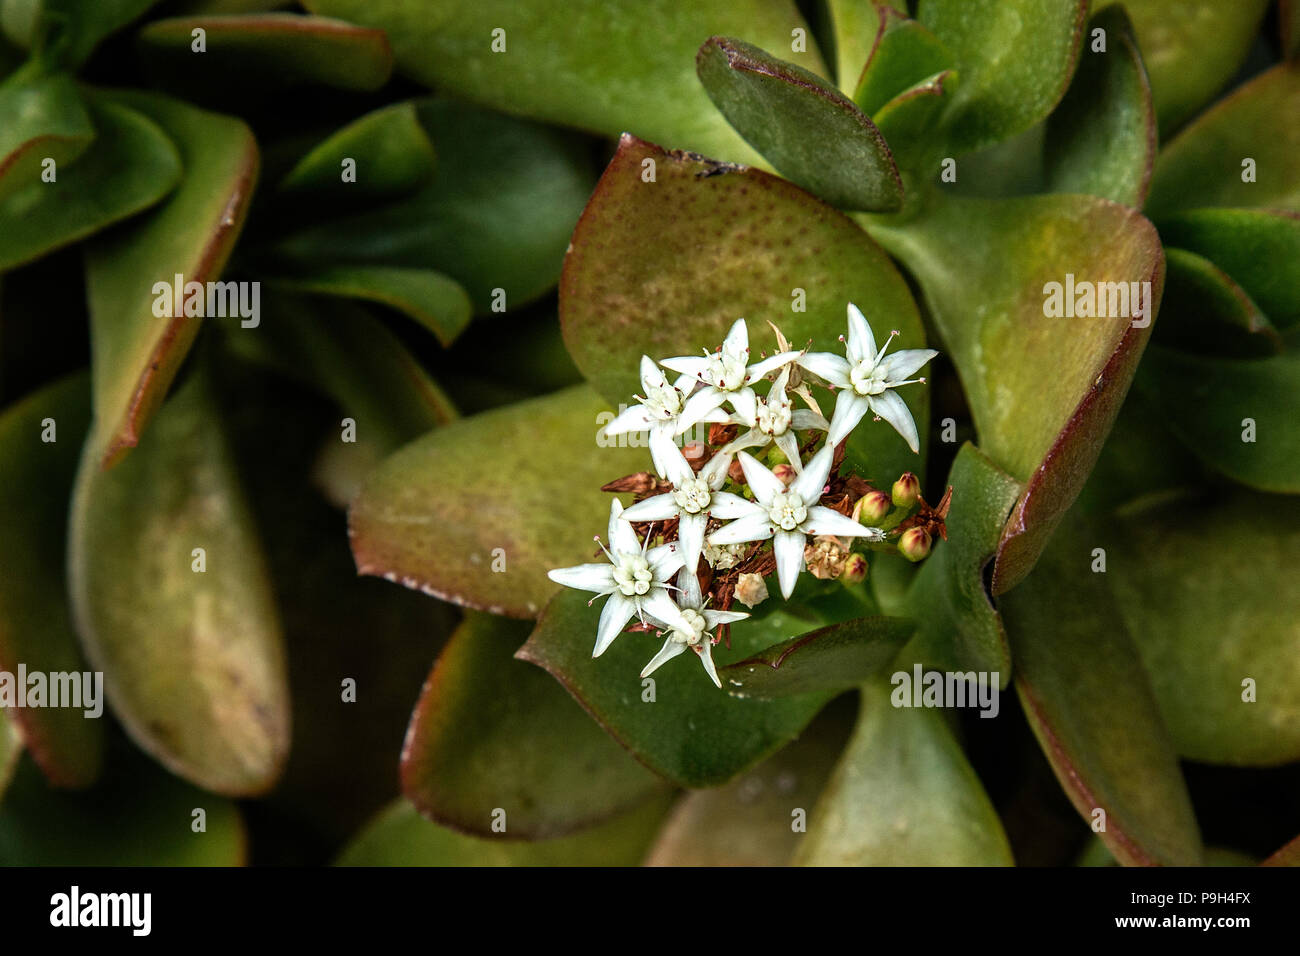 Money or Jade plant with flowers - Crassula ovata Stock Photo